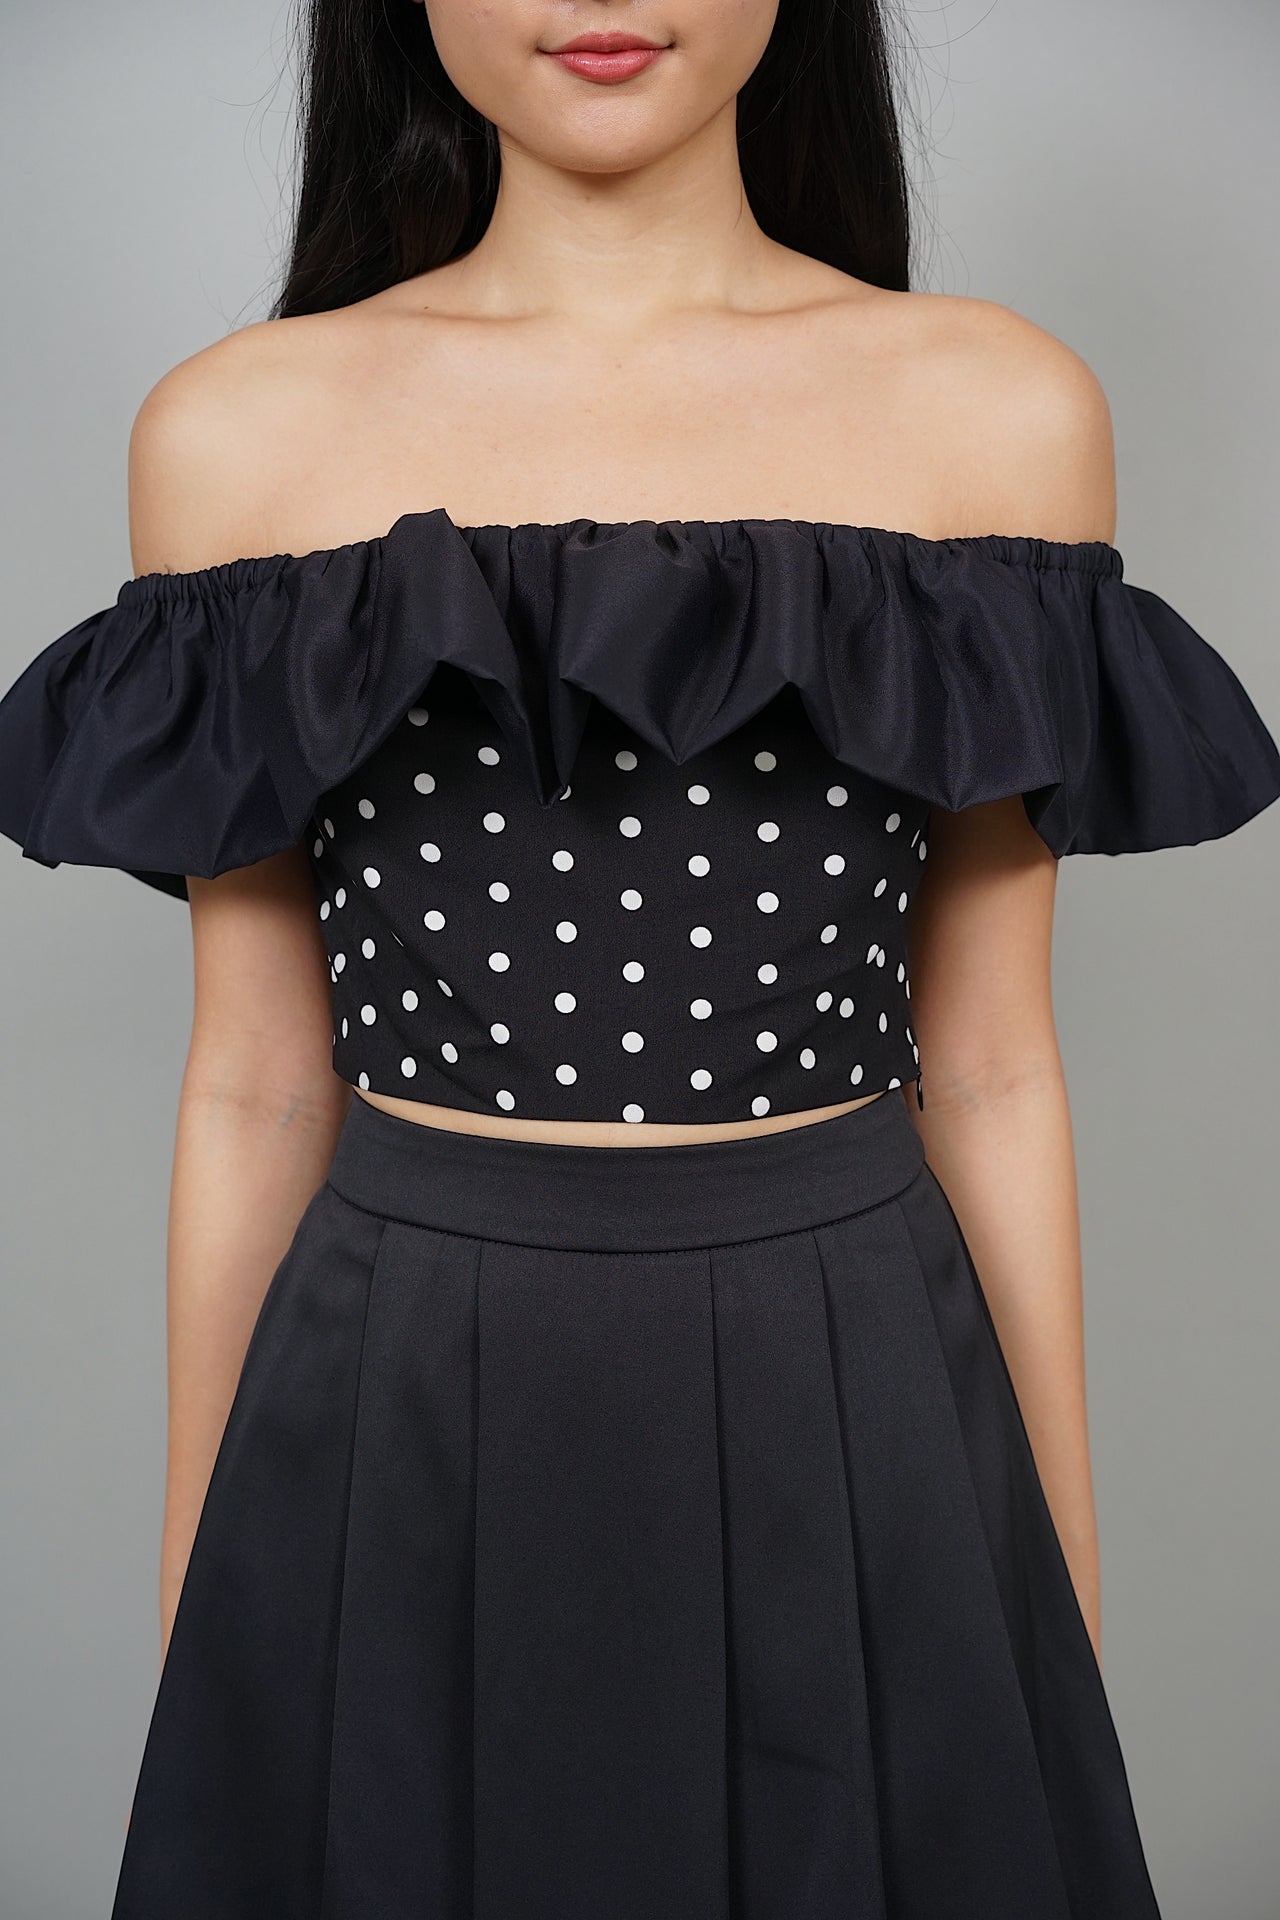 Sebrie Off-Shoulder Top in Black Polka Dots